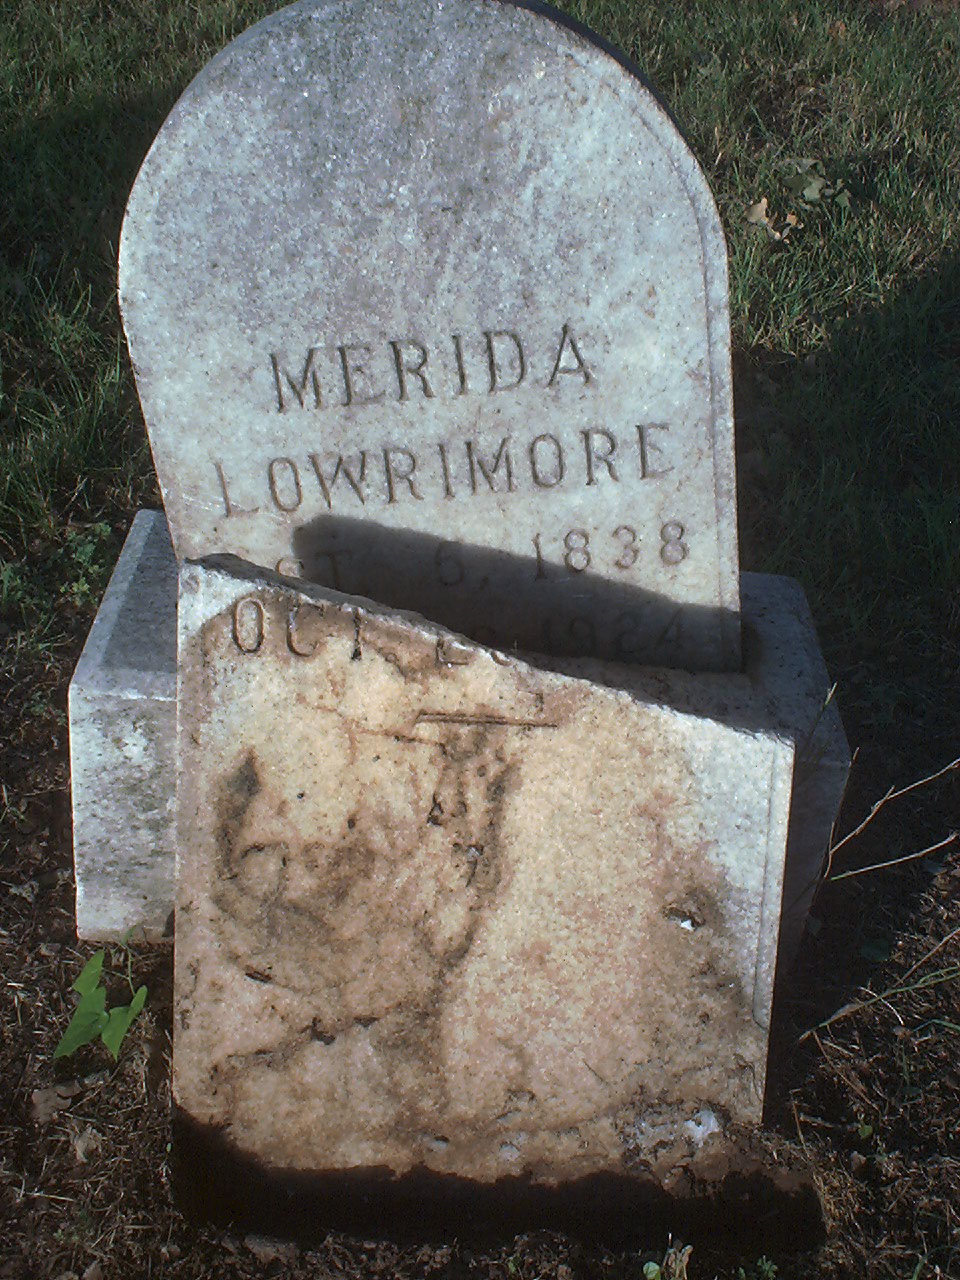 Merida Lowrimore headstone